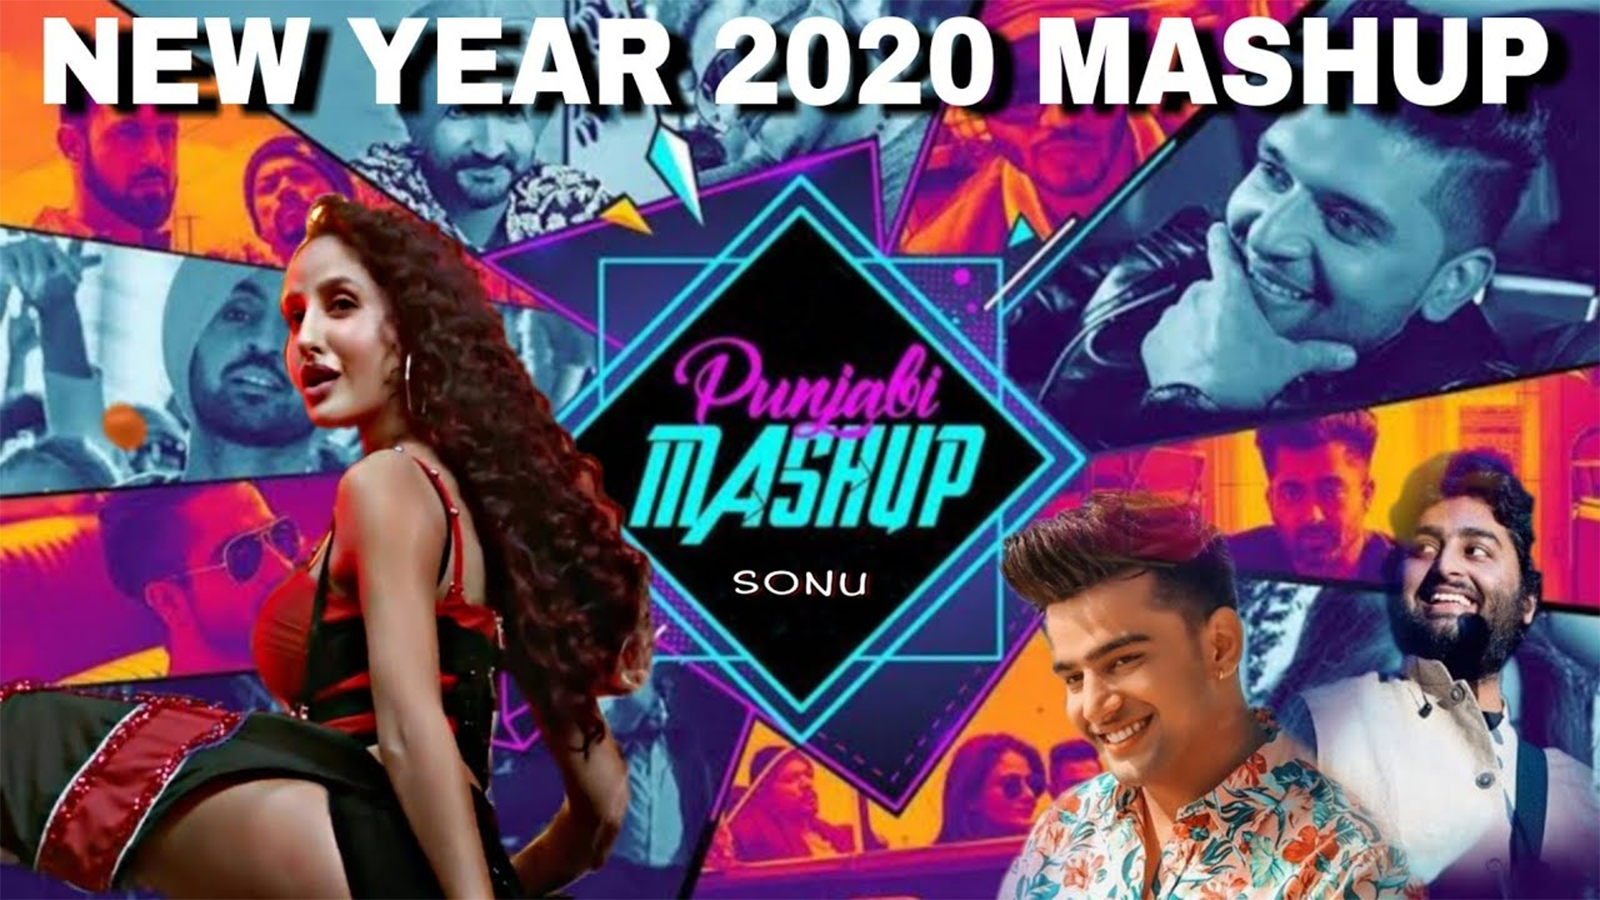 Punjabi Songs 2020 New Year 2020 Party Mix Mashup Sung By Guru Randhawa Neha Kakkar And Jass Manak Guri Punjabi Video Songs Times Of India - bass boosted rap songs roblox id 2020